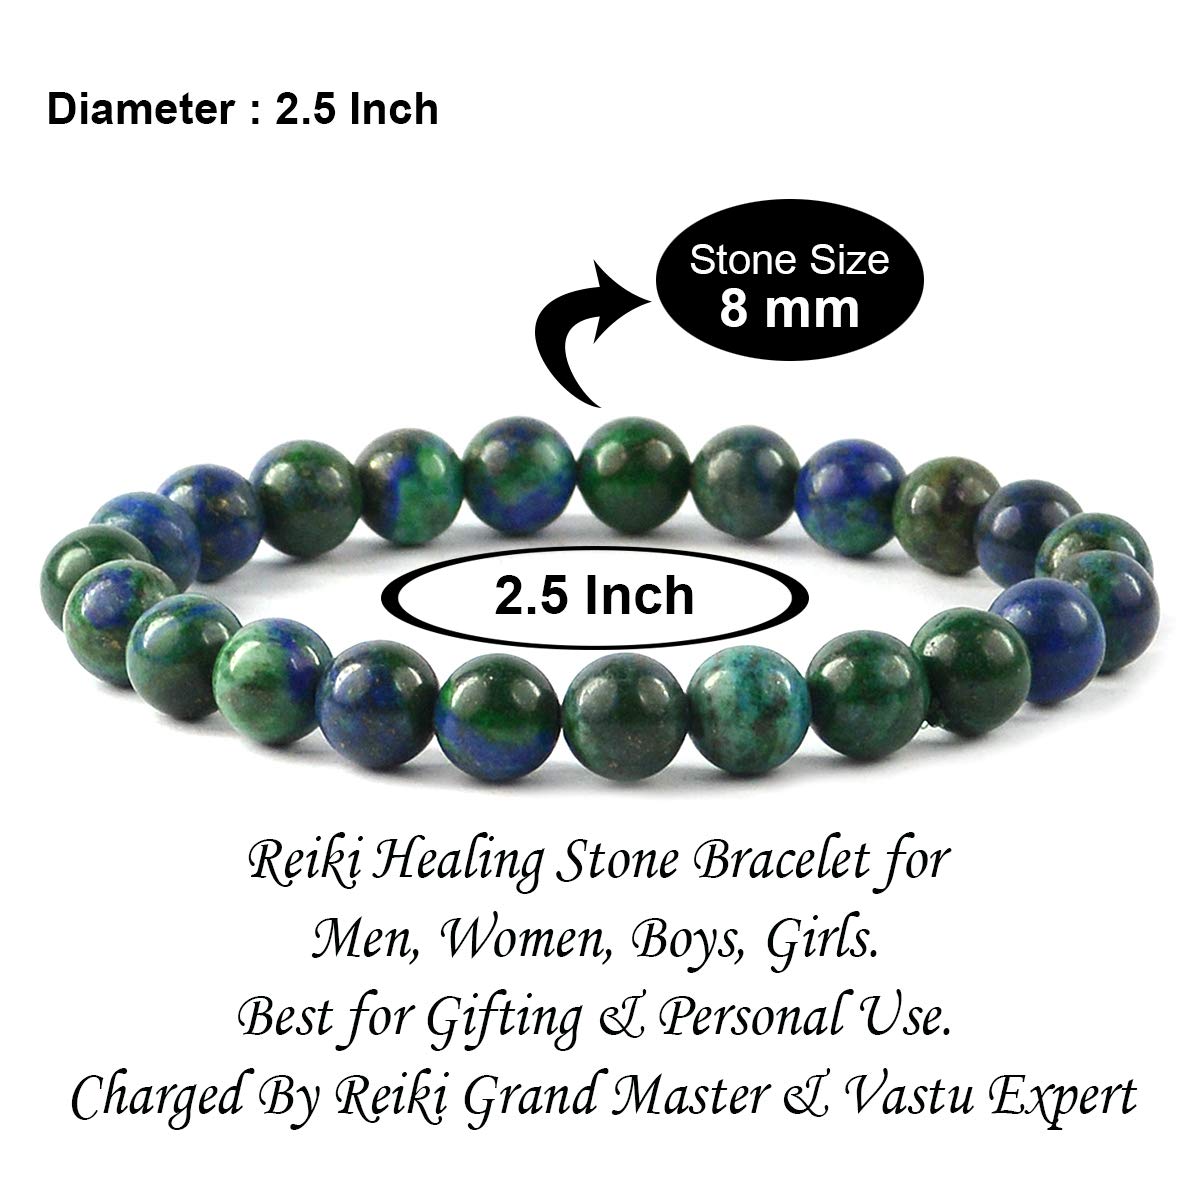 Azurite Natural Healing Crystal Bracelet - 8mm Round Beads - Beaded Bracelet